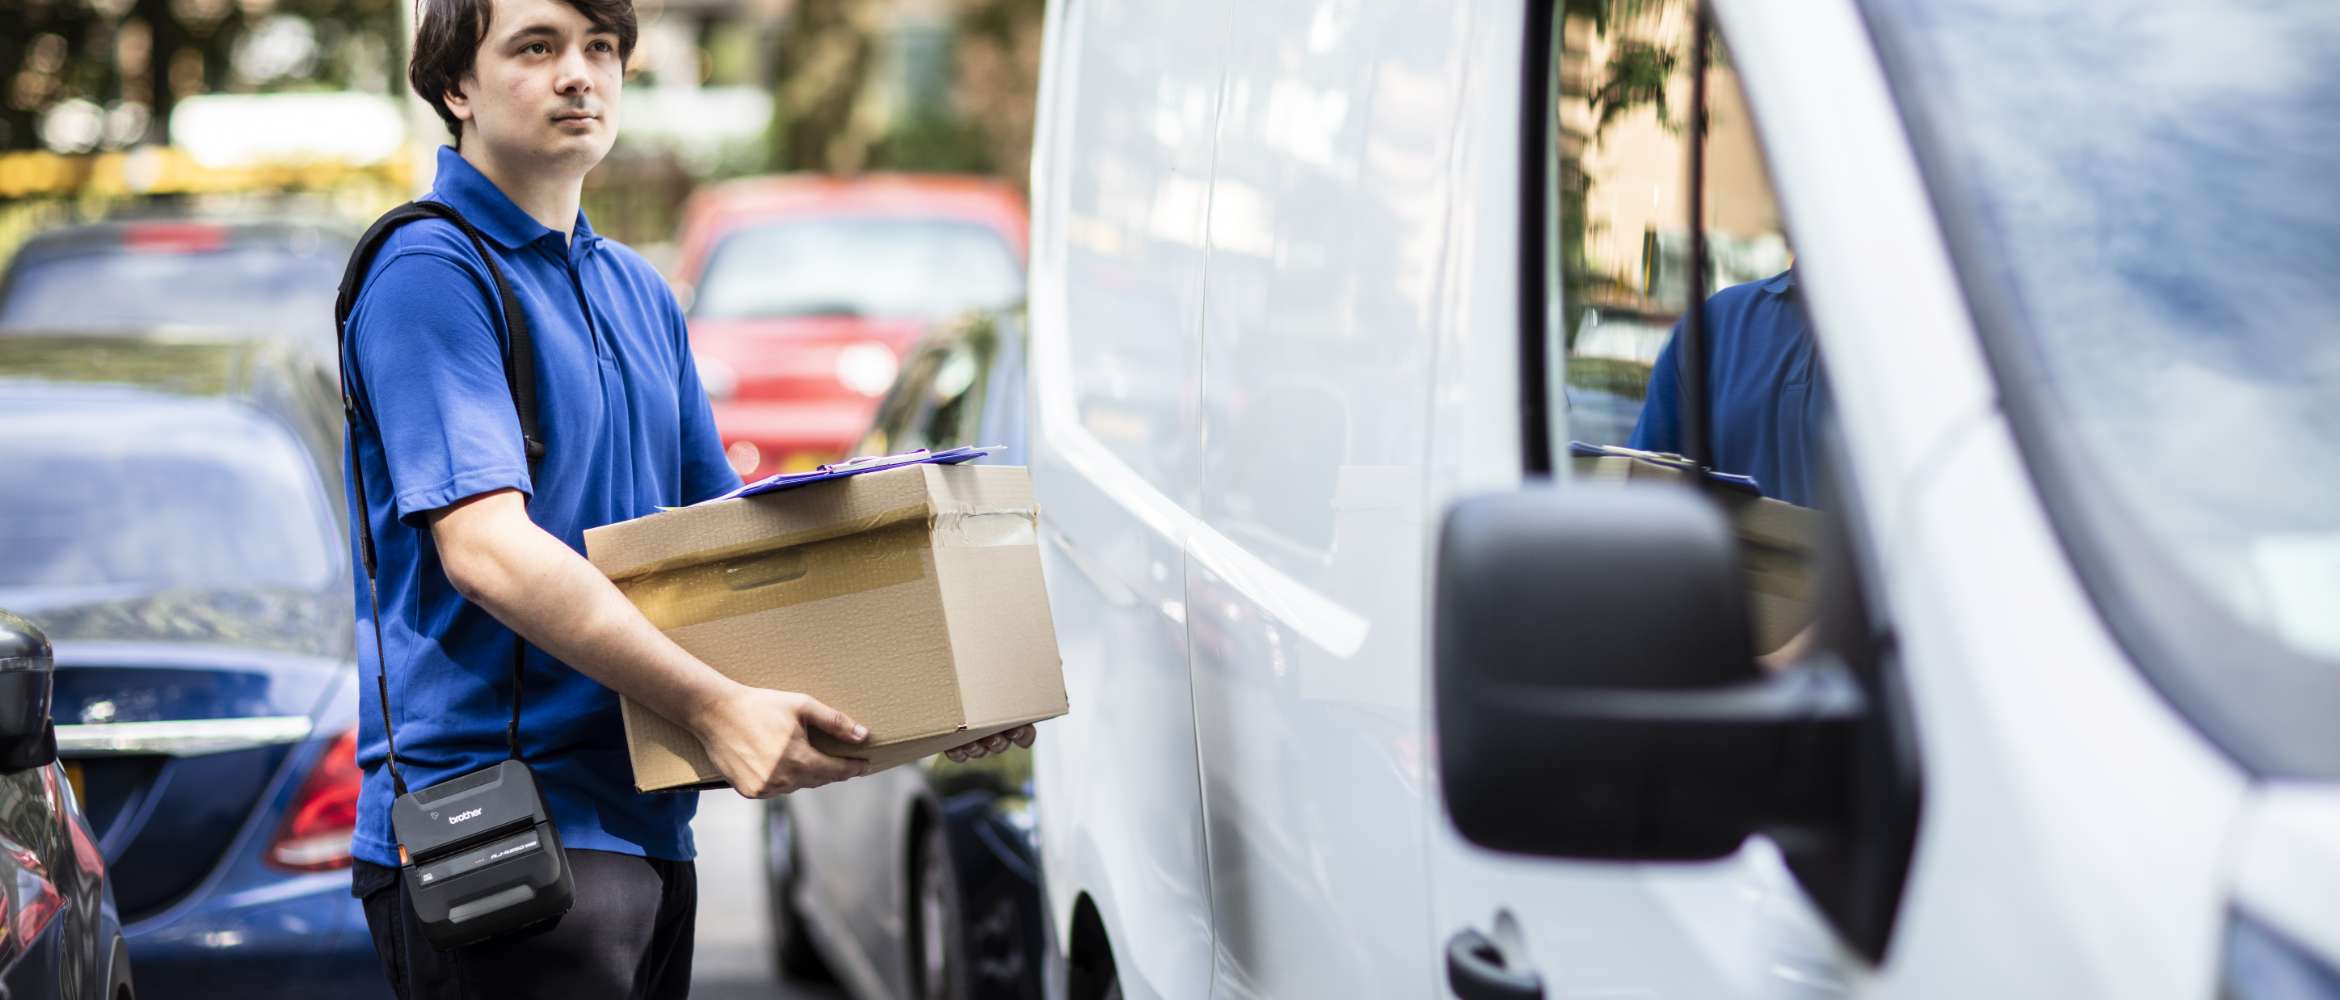 En leveringssjåfør i transport- og logistikkbransjen leverer en pakke til en bolig.